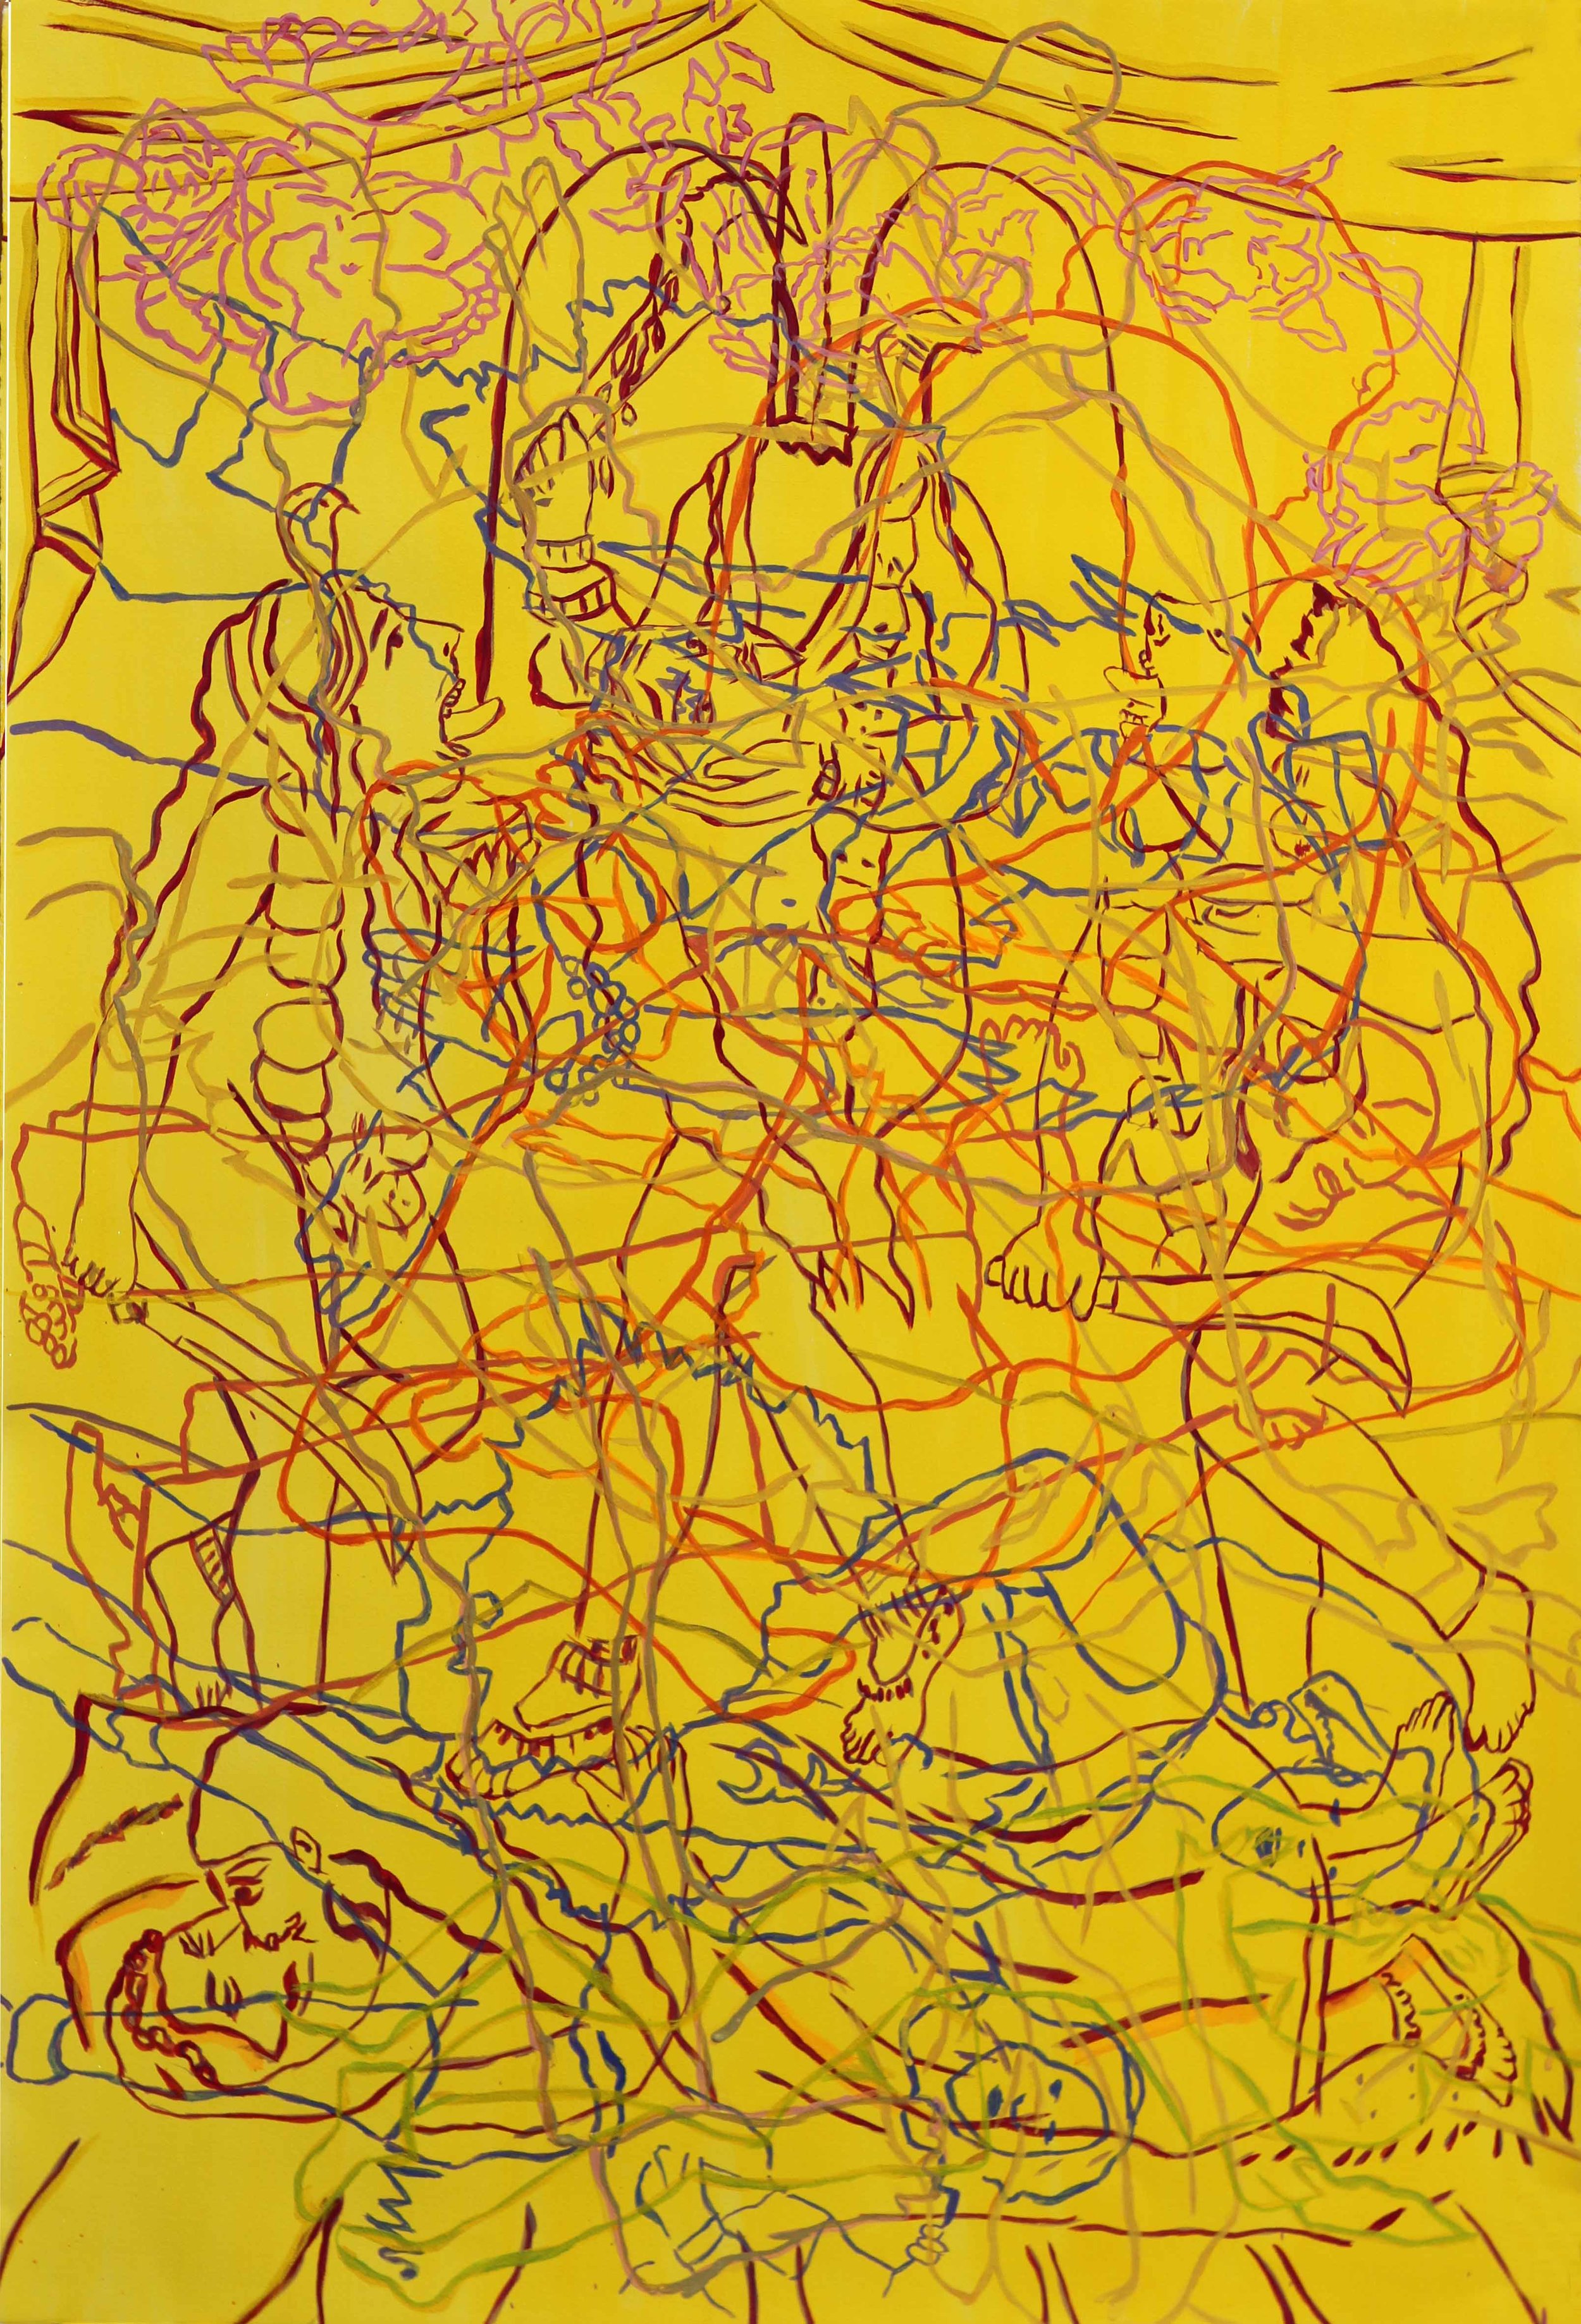  Ranu Mukherjee,  body language , 2017, pigment and milk paint on paper on panel, 44 x 30 inches (111.8 x 76.2 cm) 